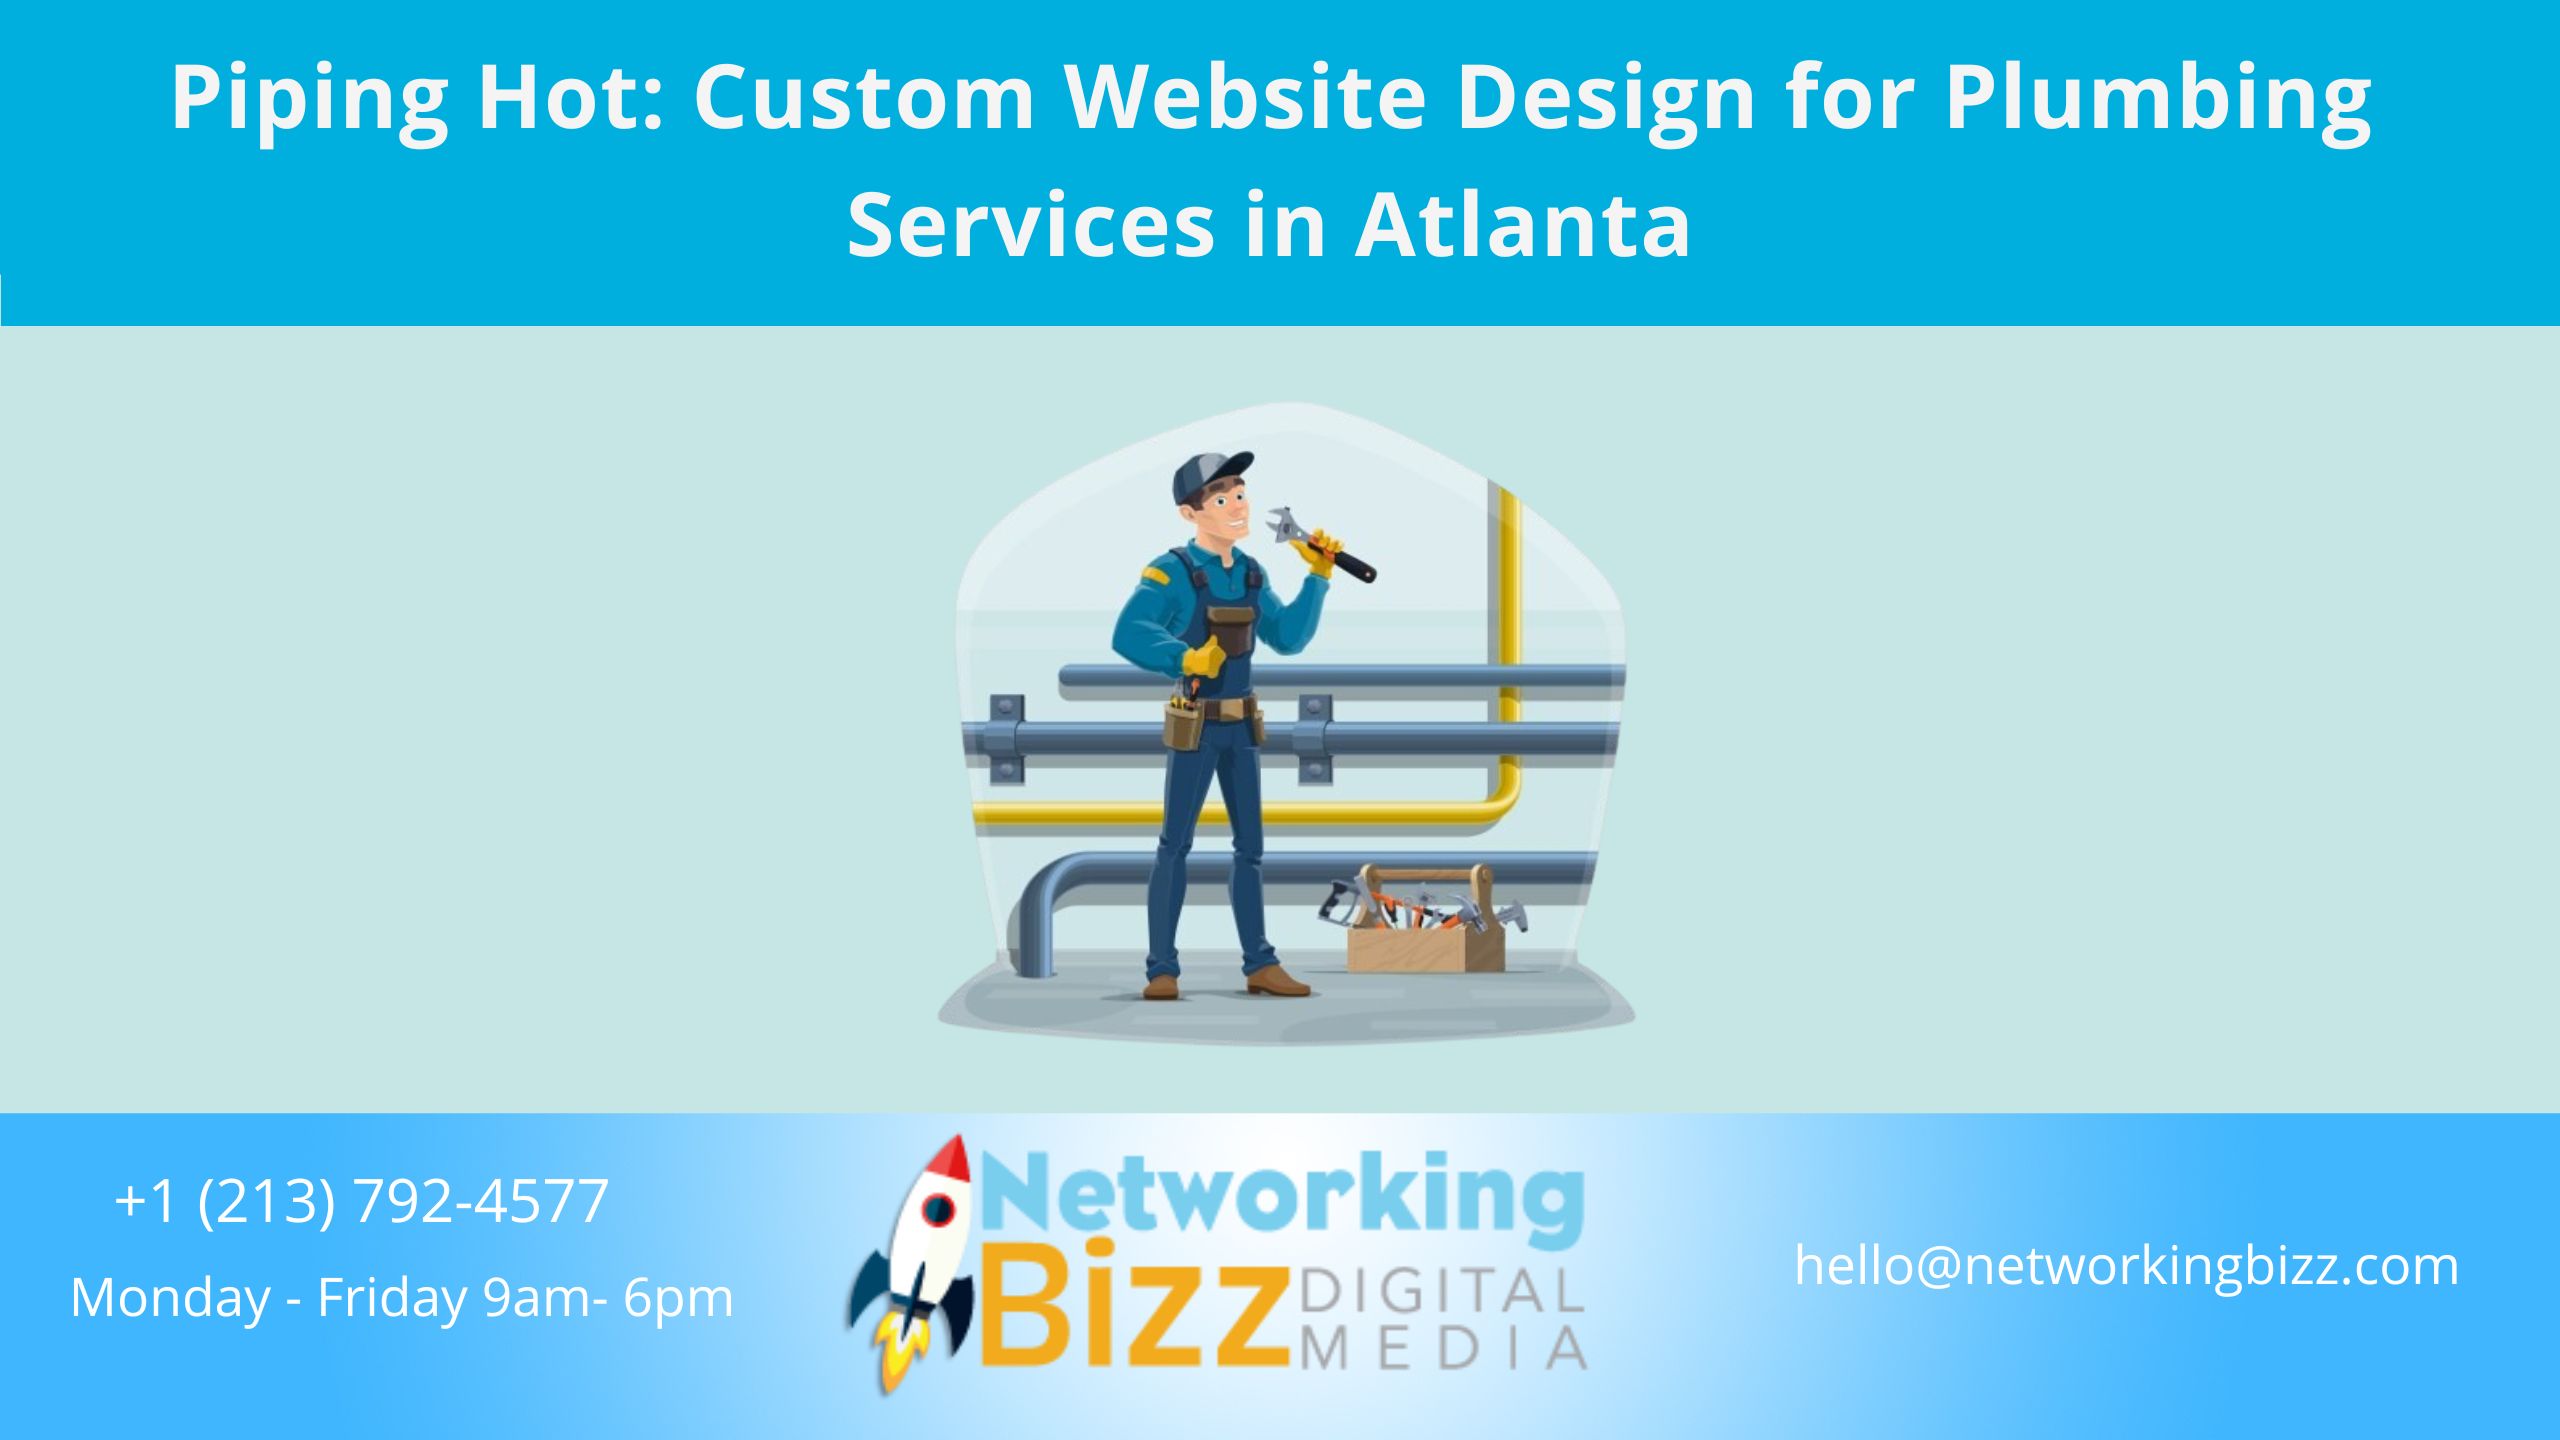 Piping Hot: Custom Website Design for Plumbing Services in Atlanta